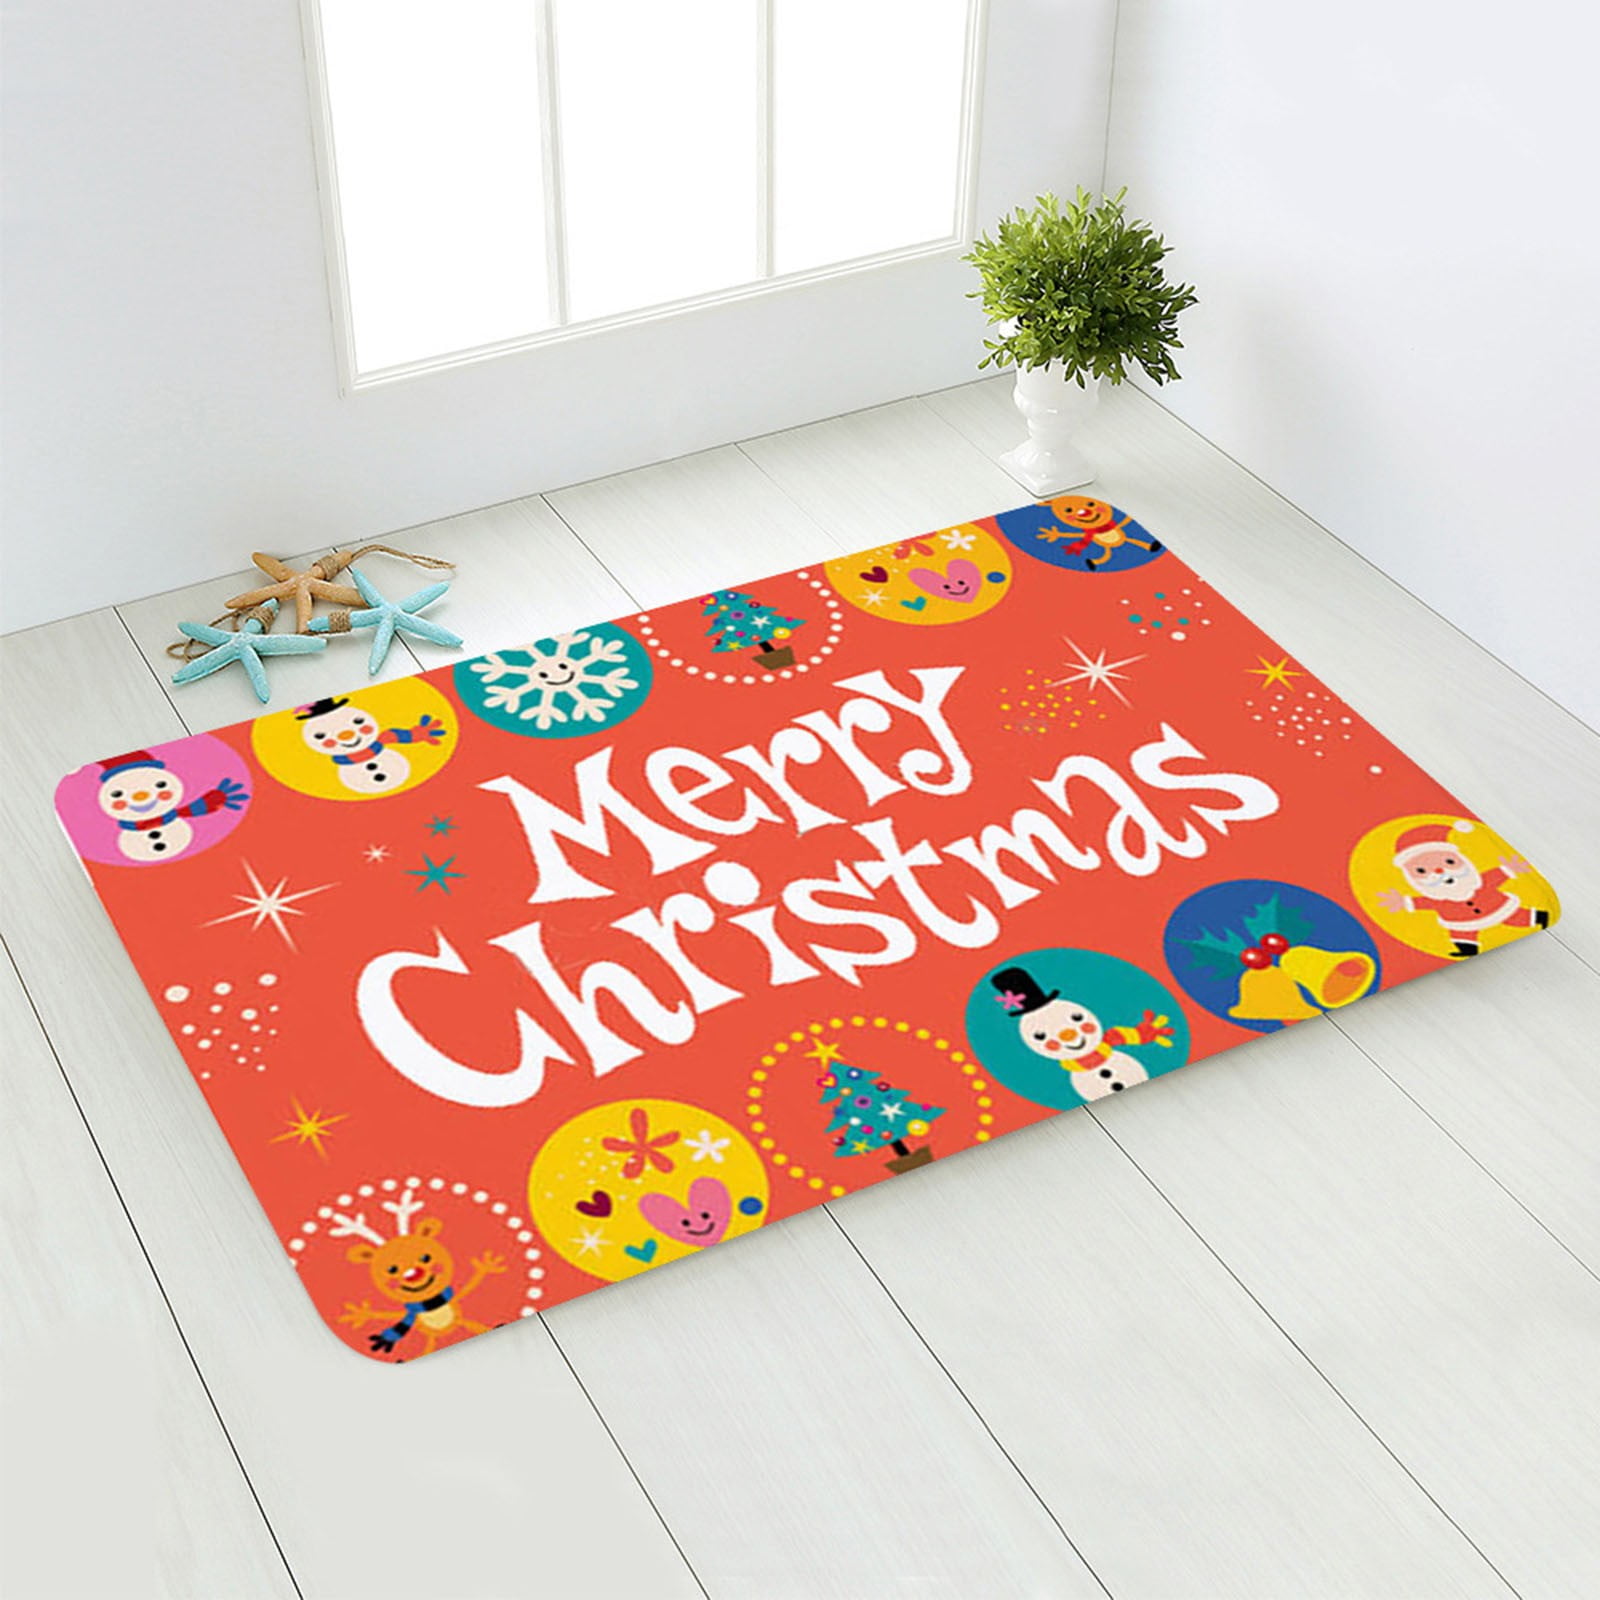 The Nightmare Before Christmas Doormat 40 x 60 cm NEW